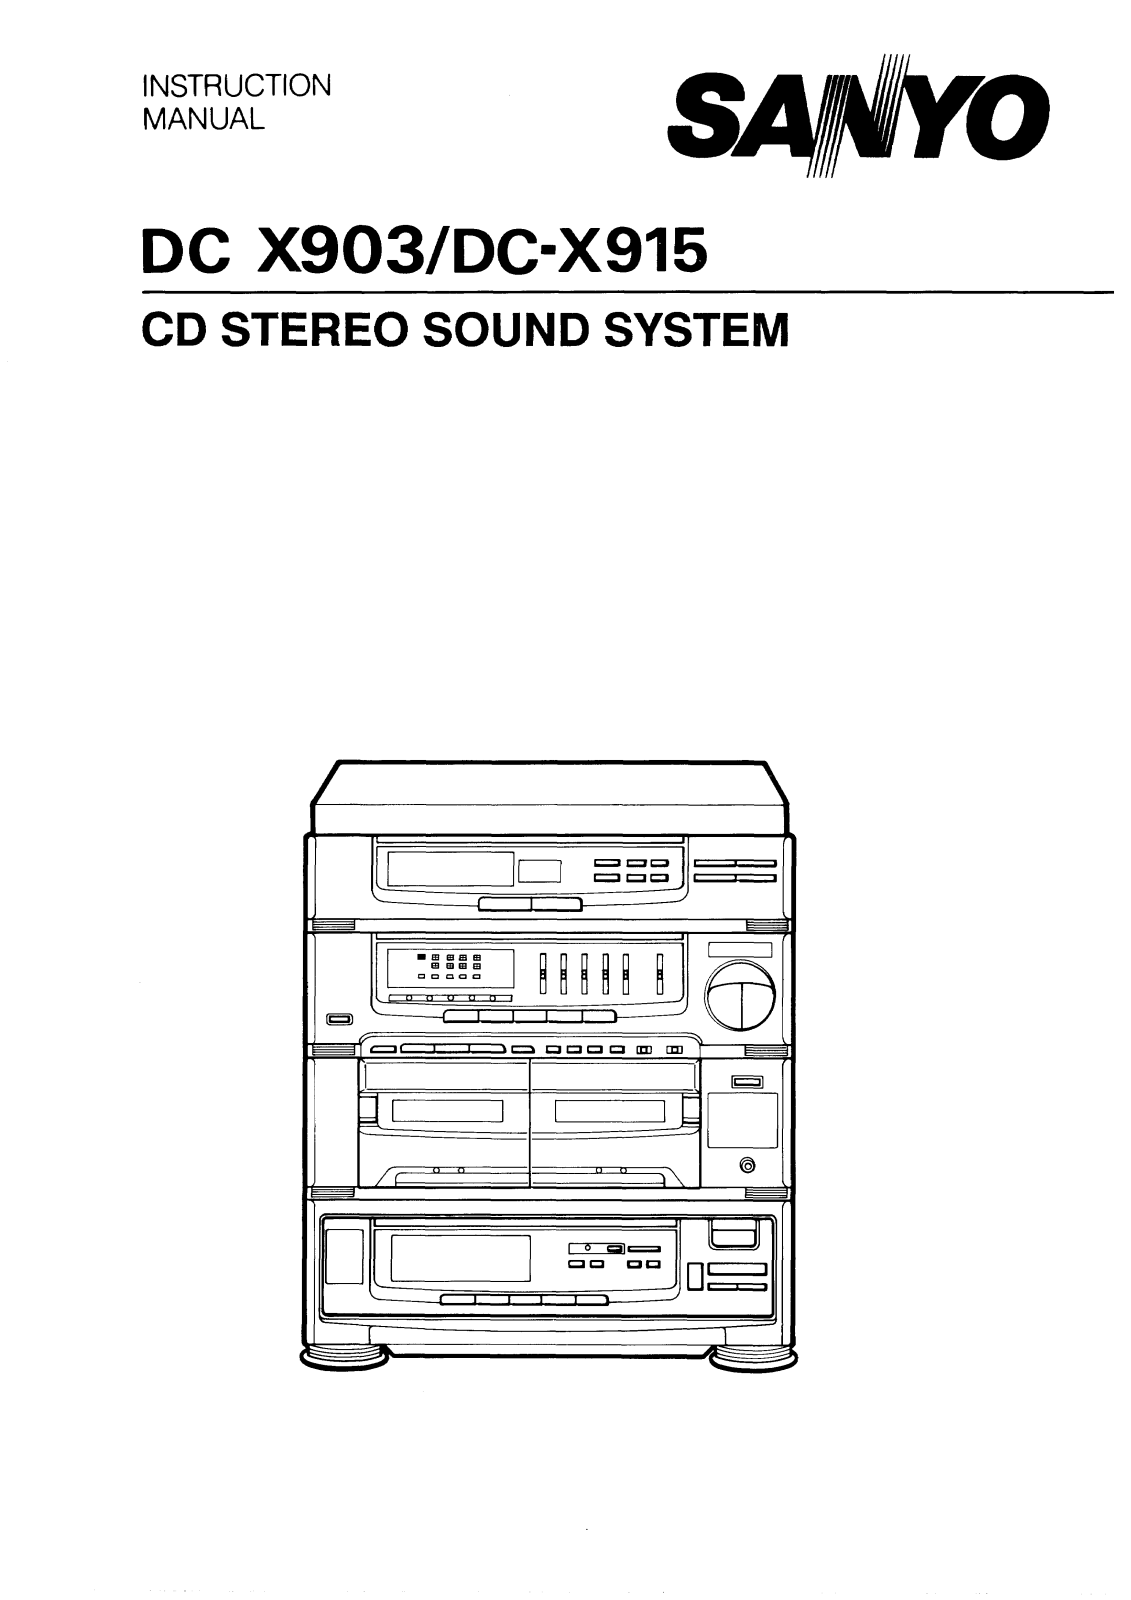 Sanyo DC X903 Instruction Manual